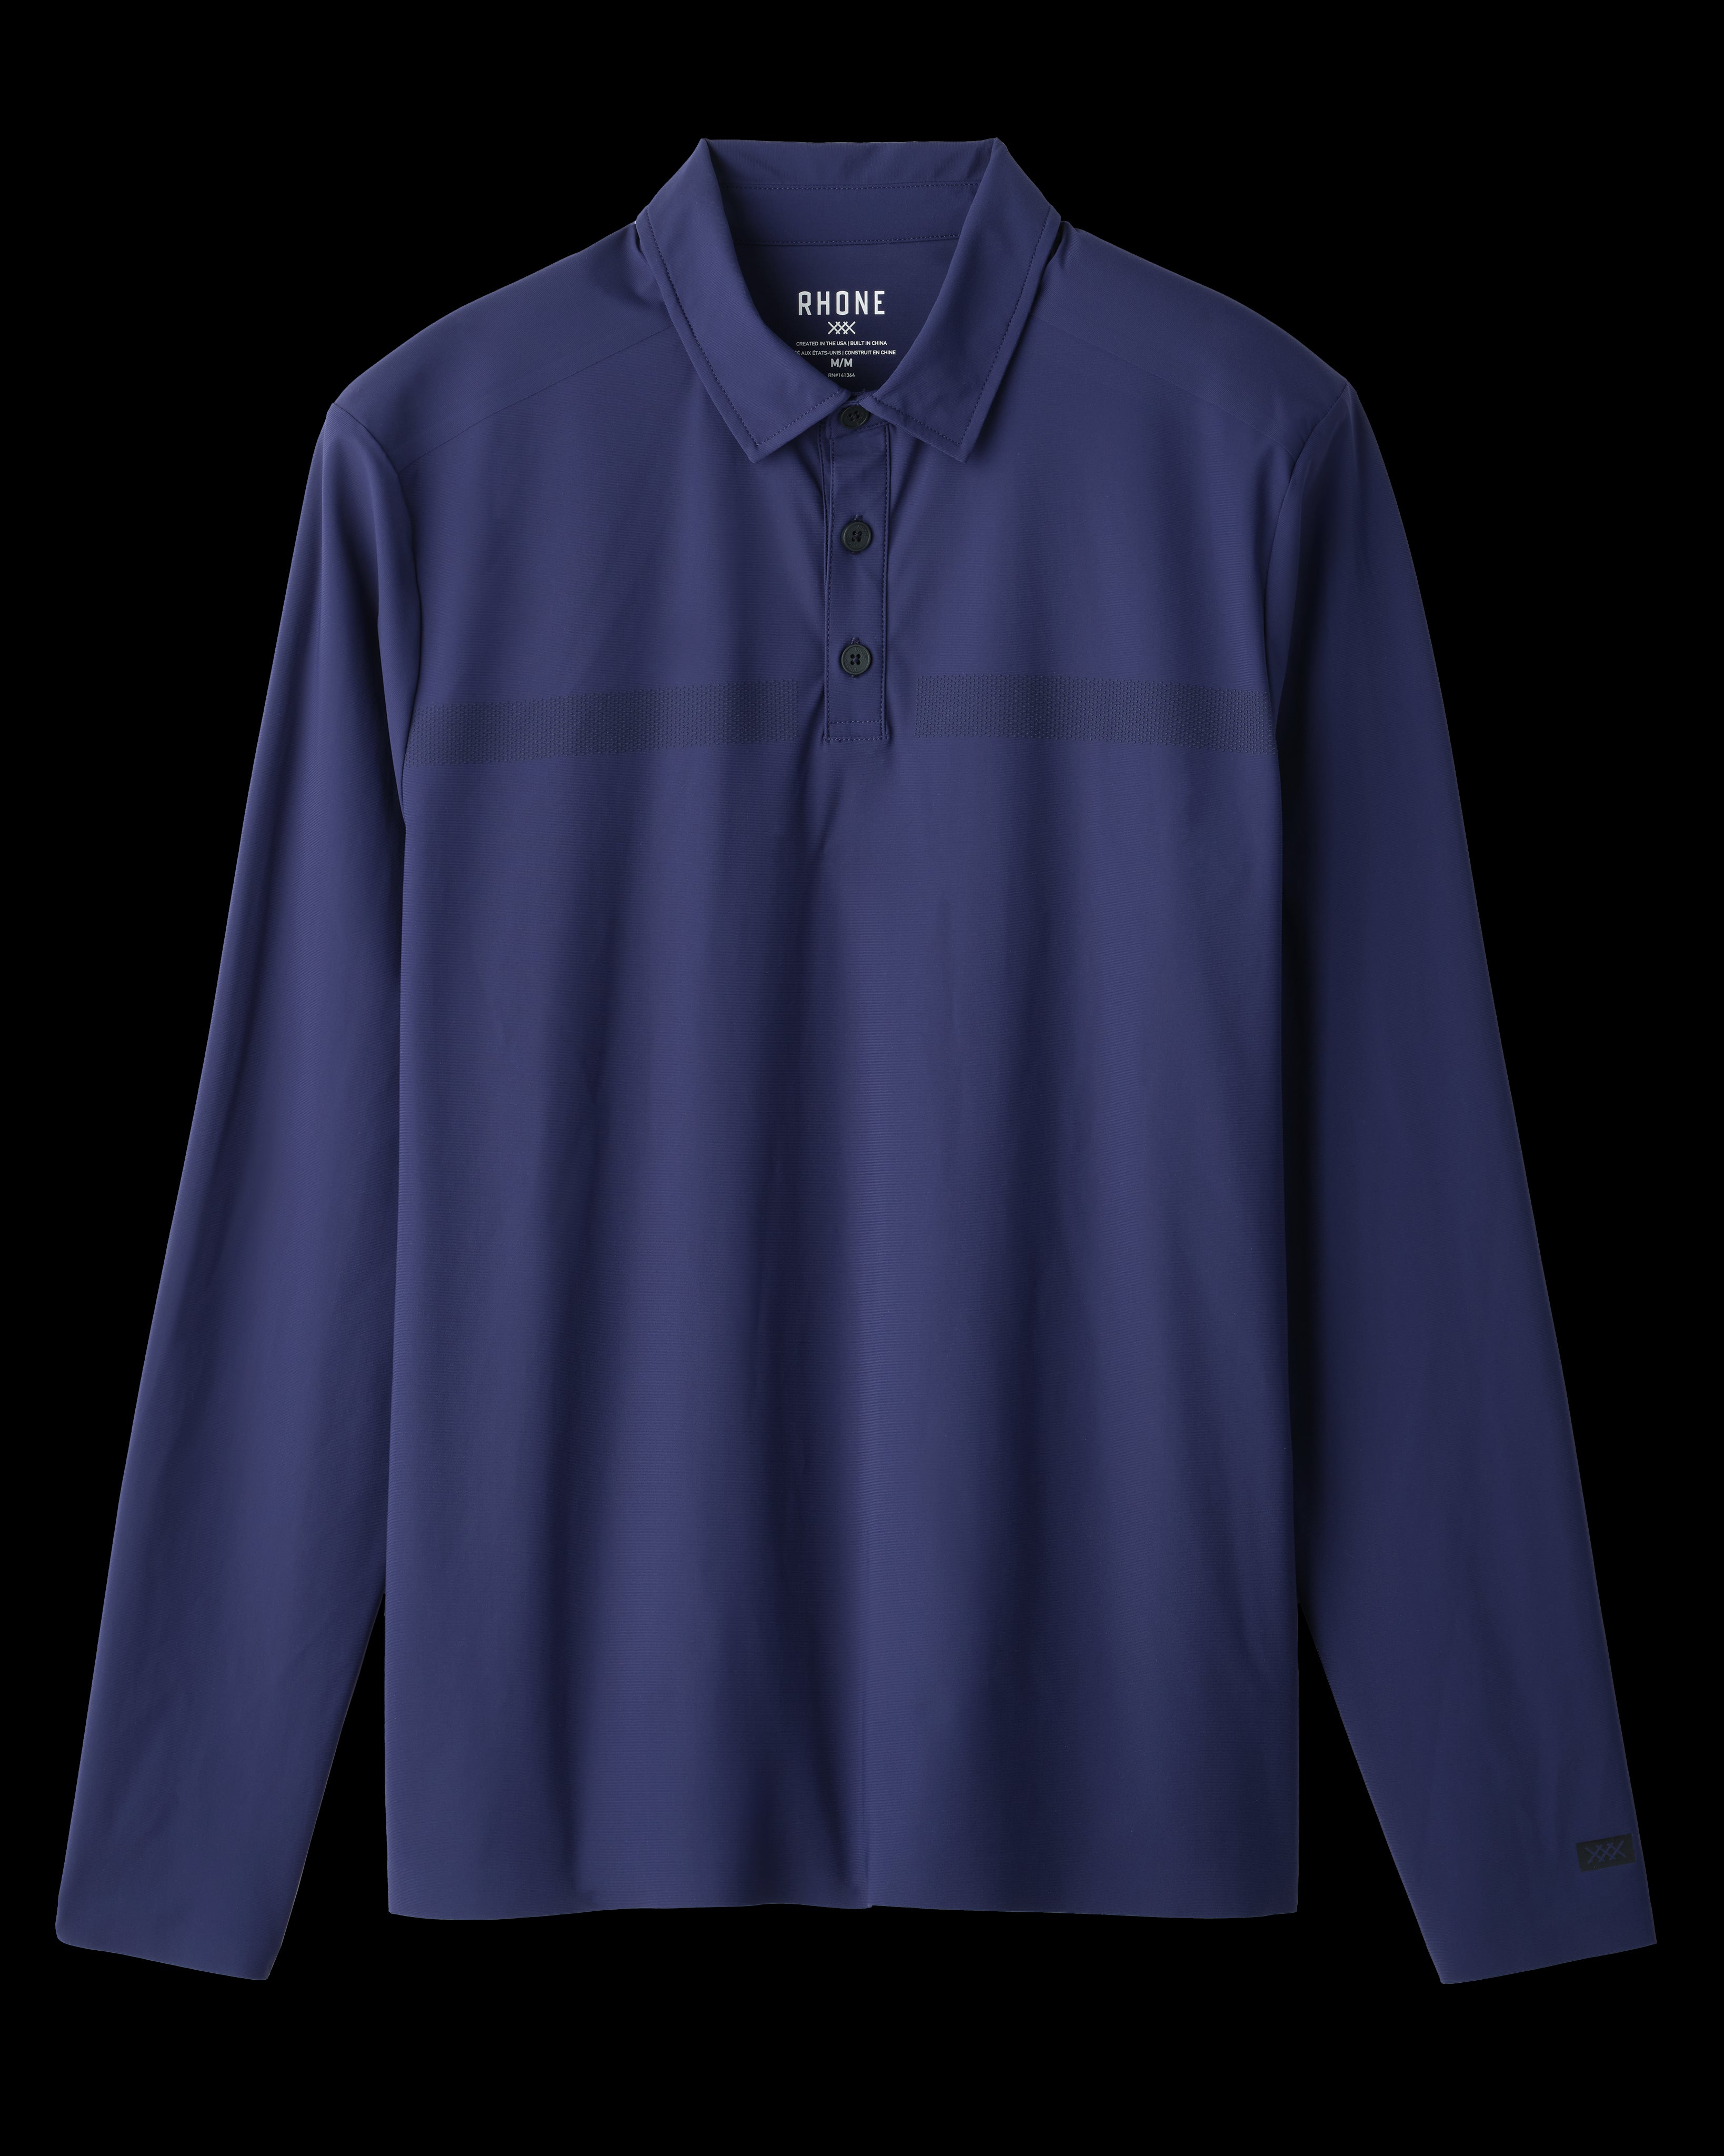 Ways To Wear: The Long Sleeve Polo Shirt